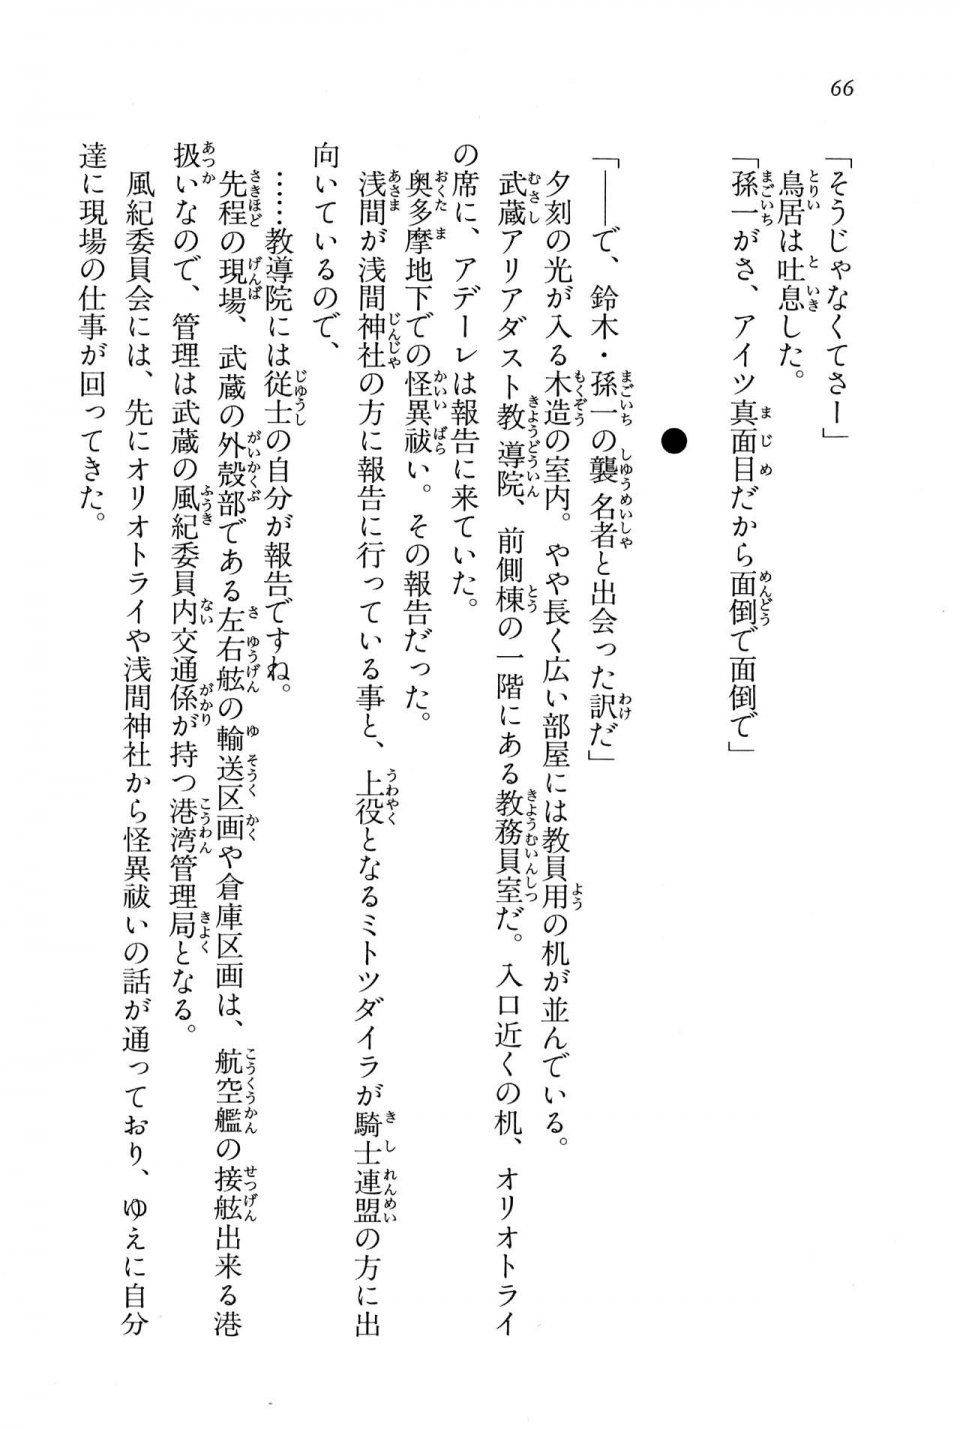 Kyoukai Senjou no Horizon BD Special Mininovel Vol 6(3B) - Photo #70